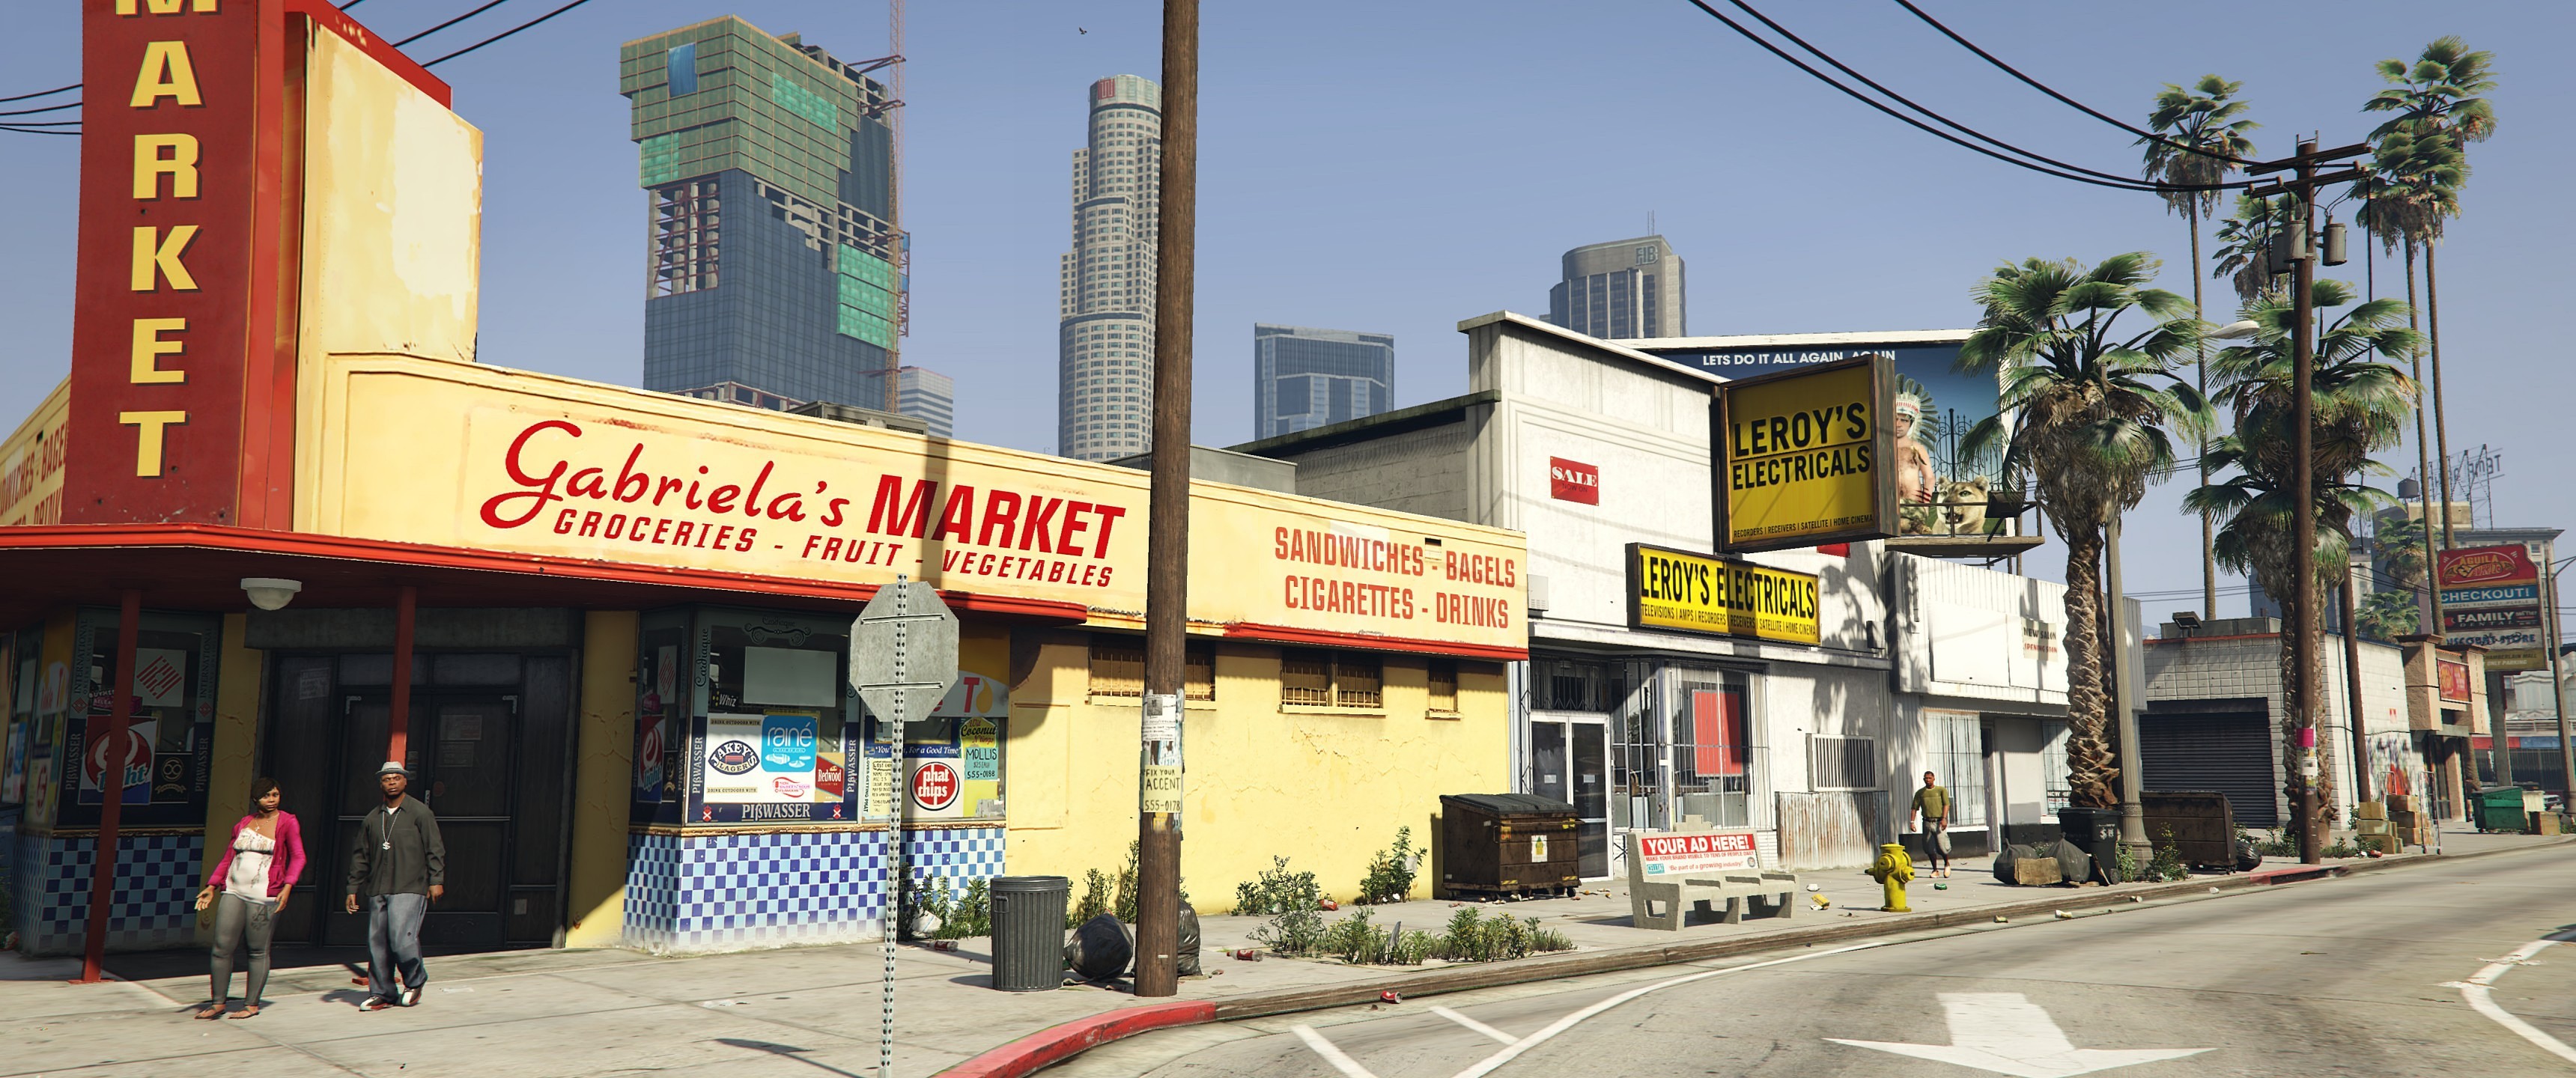 Grand Theft Auto V, Video Games Wallpaper